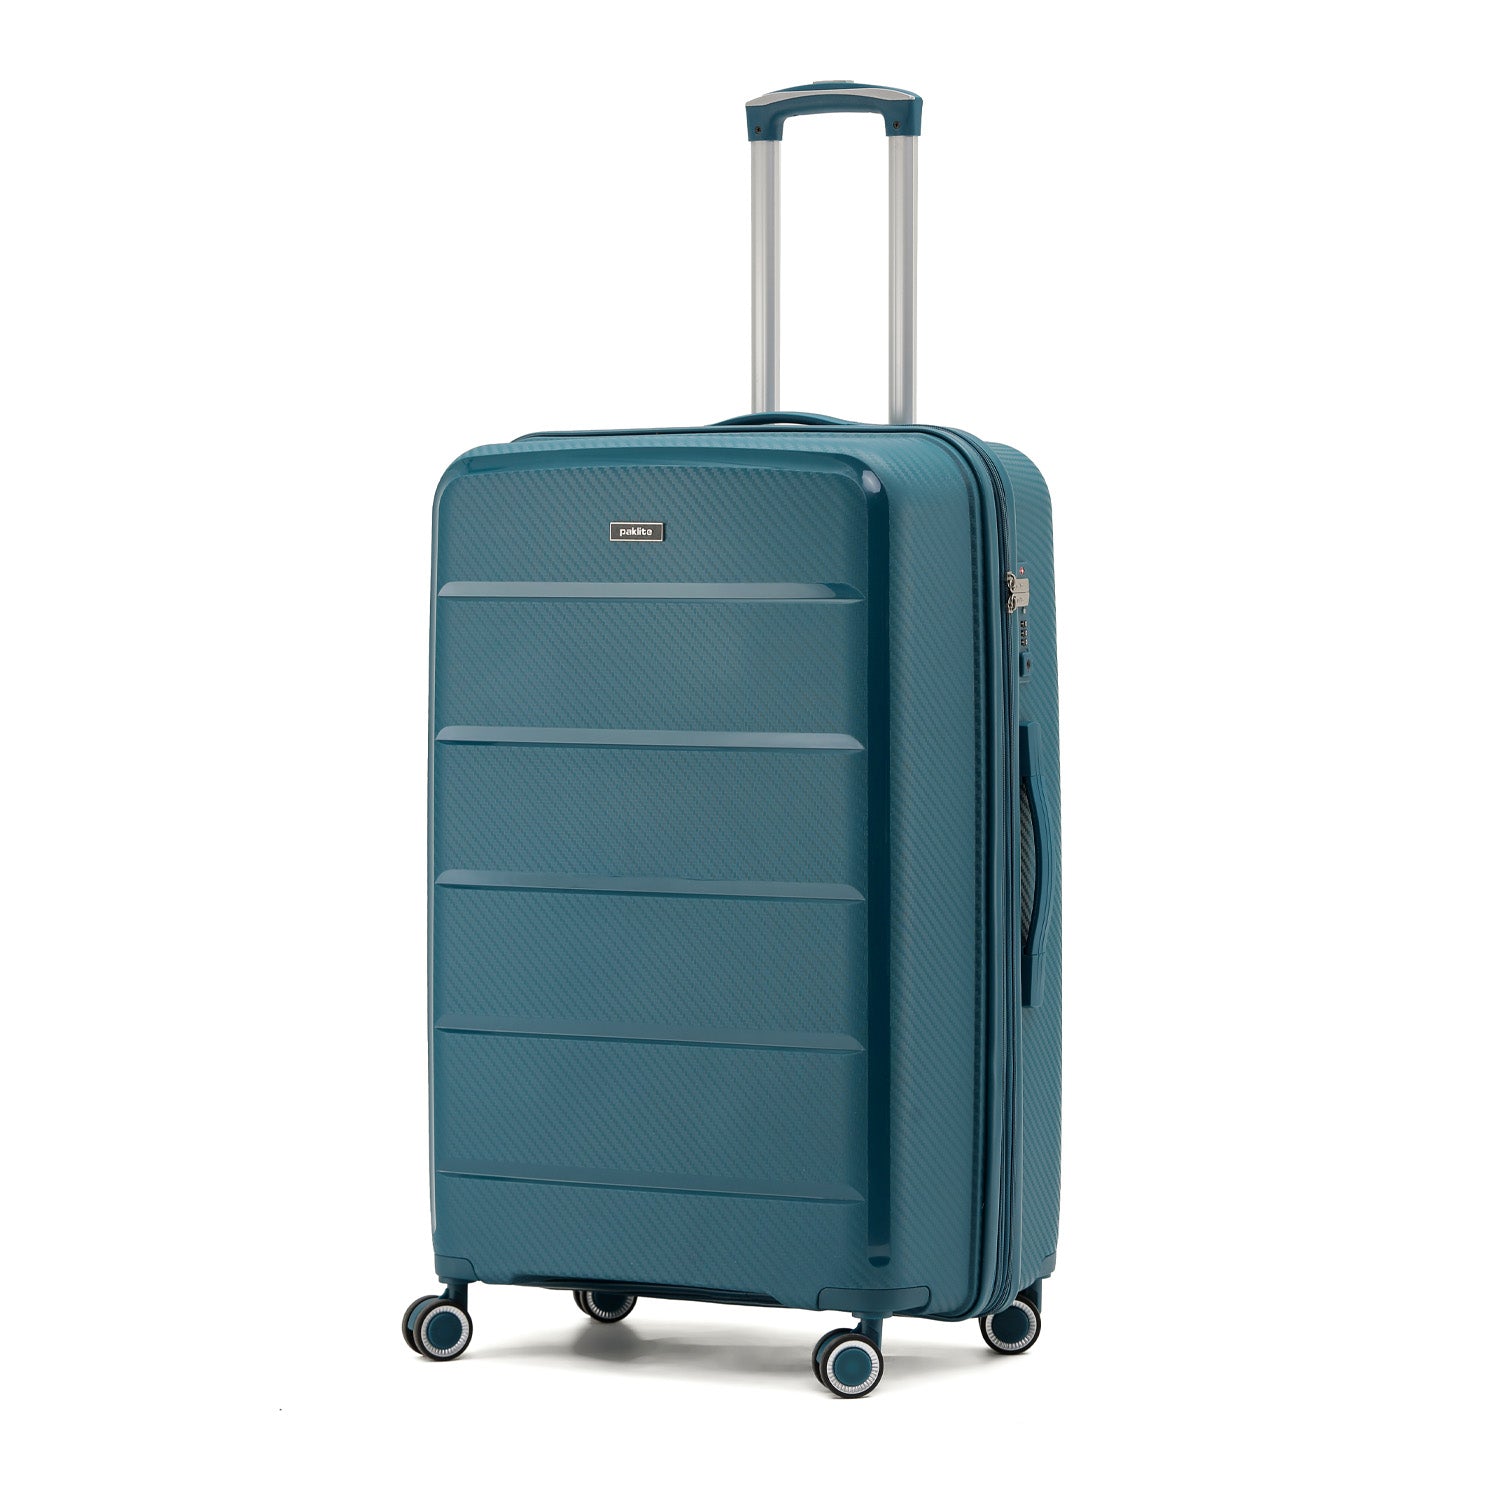 Paklite - PA7350 Set of 3 Suitcases - Blue-8